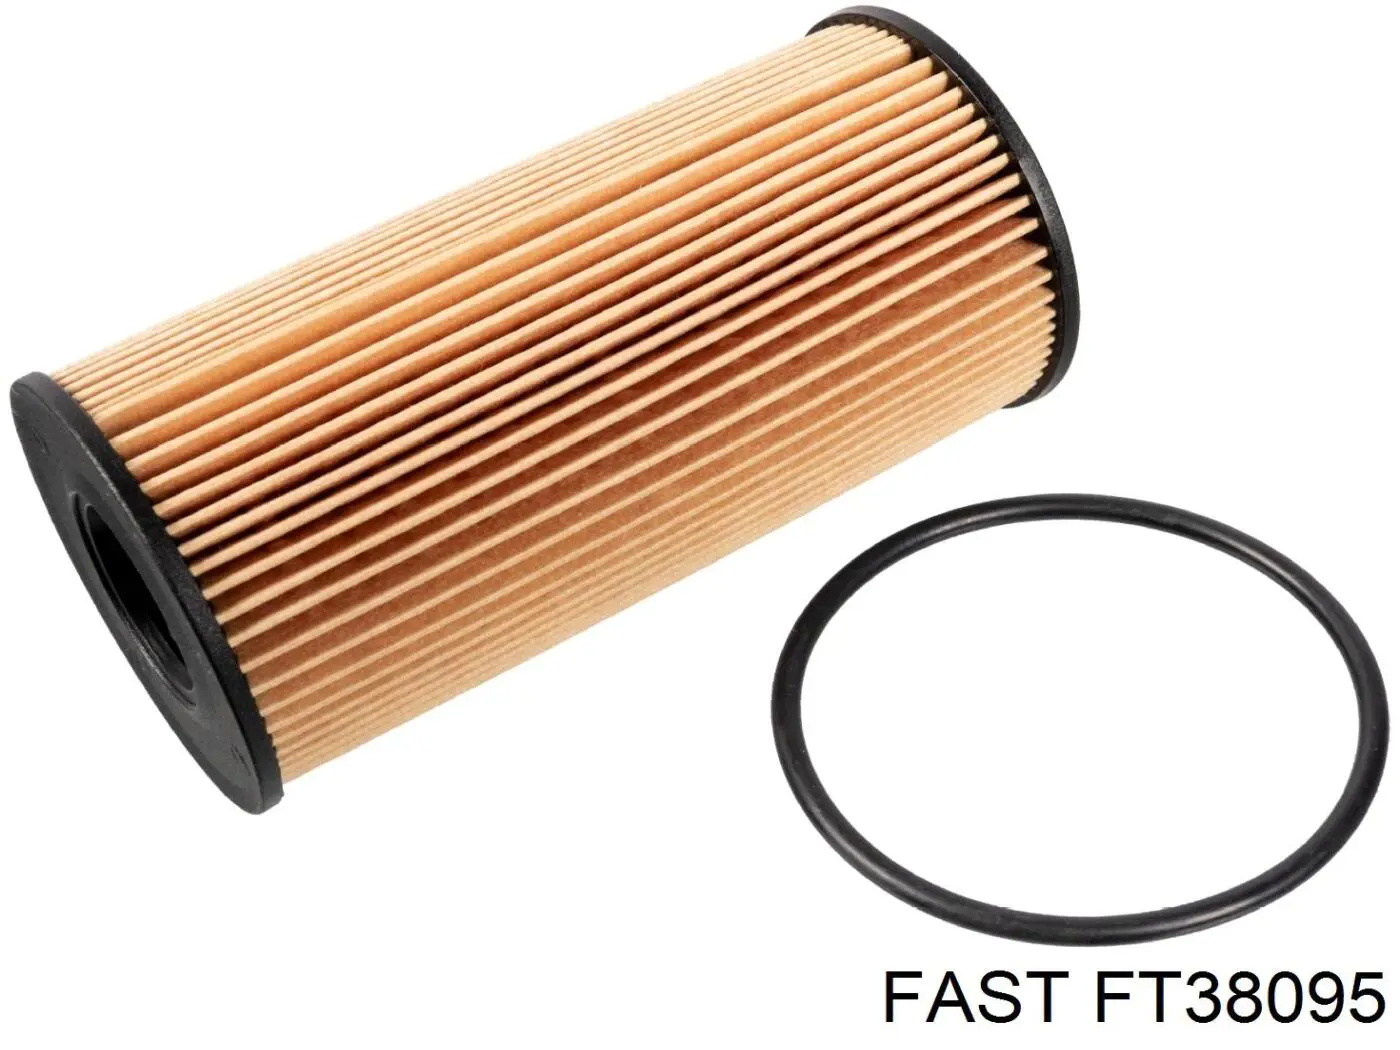 FT38095 Fast filtro de aceite